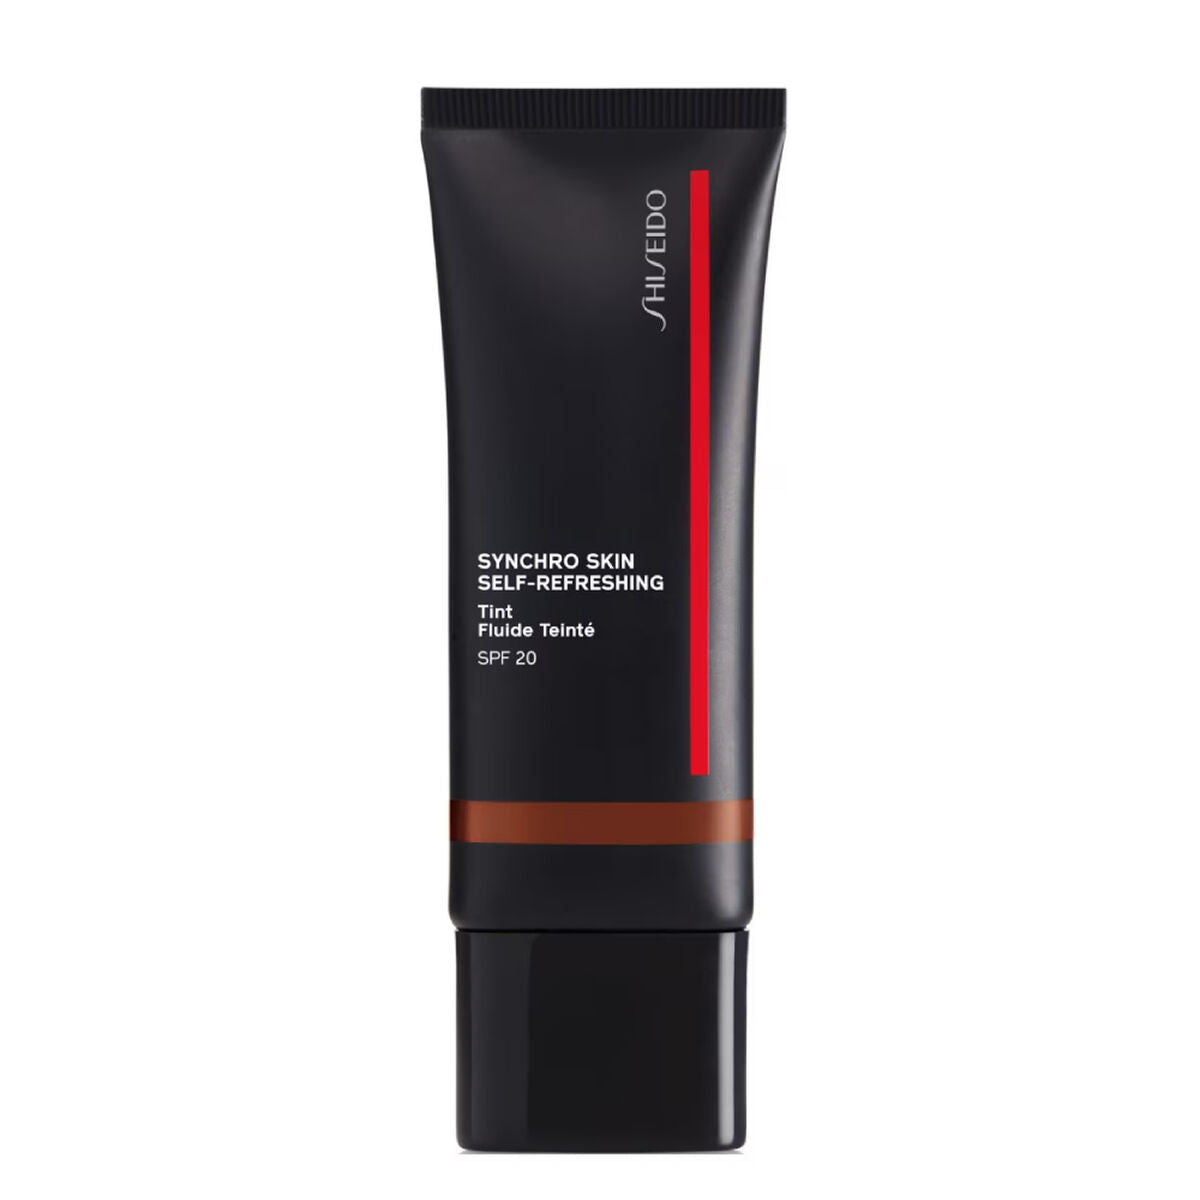 Kaufe Fluid Makeup Basis Shiseido Synchro Skin Self-Refreshing Nº 525 30 ml bei AWK Flagship um € 51.00